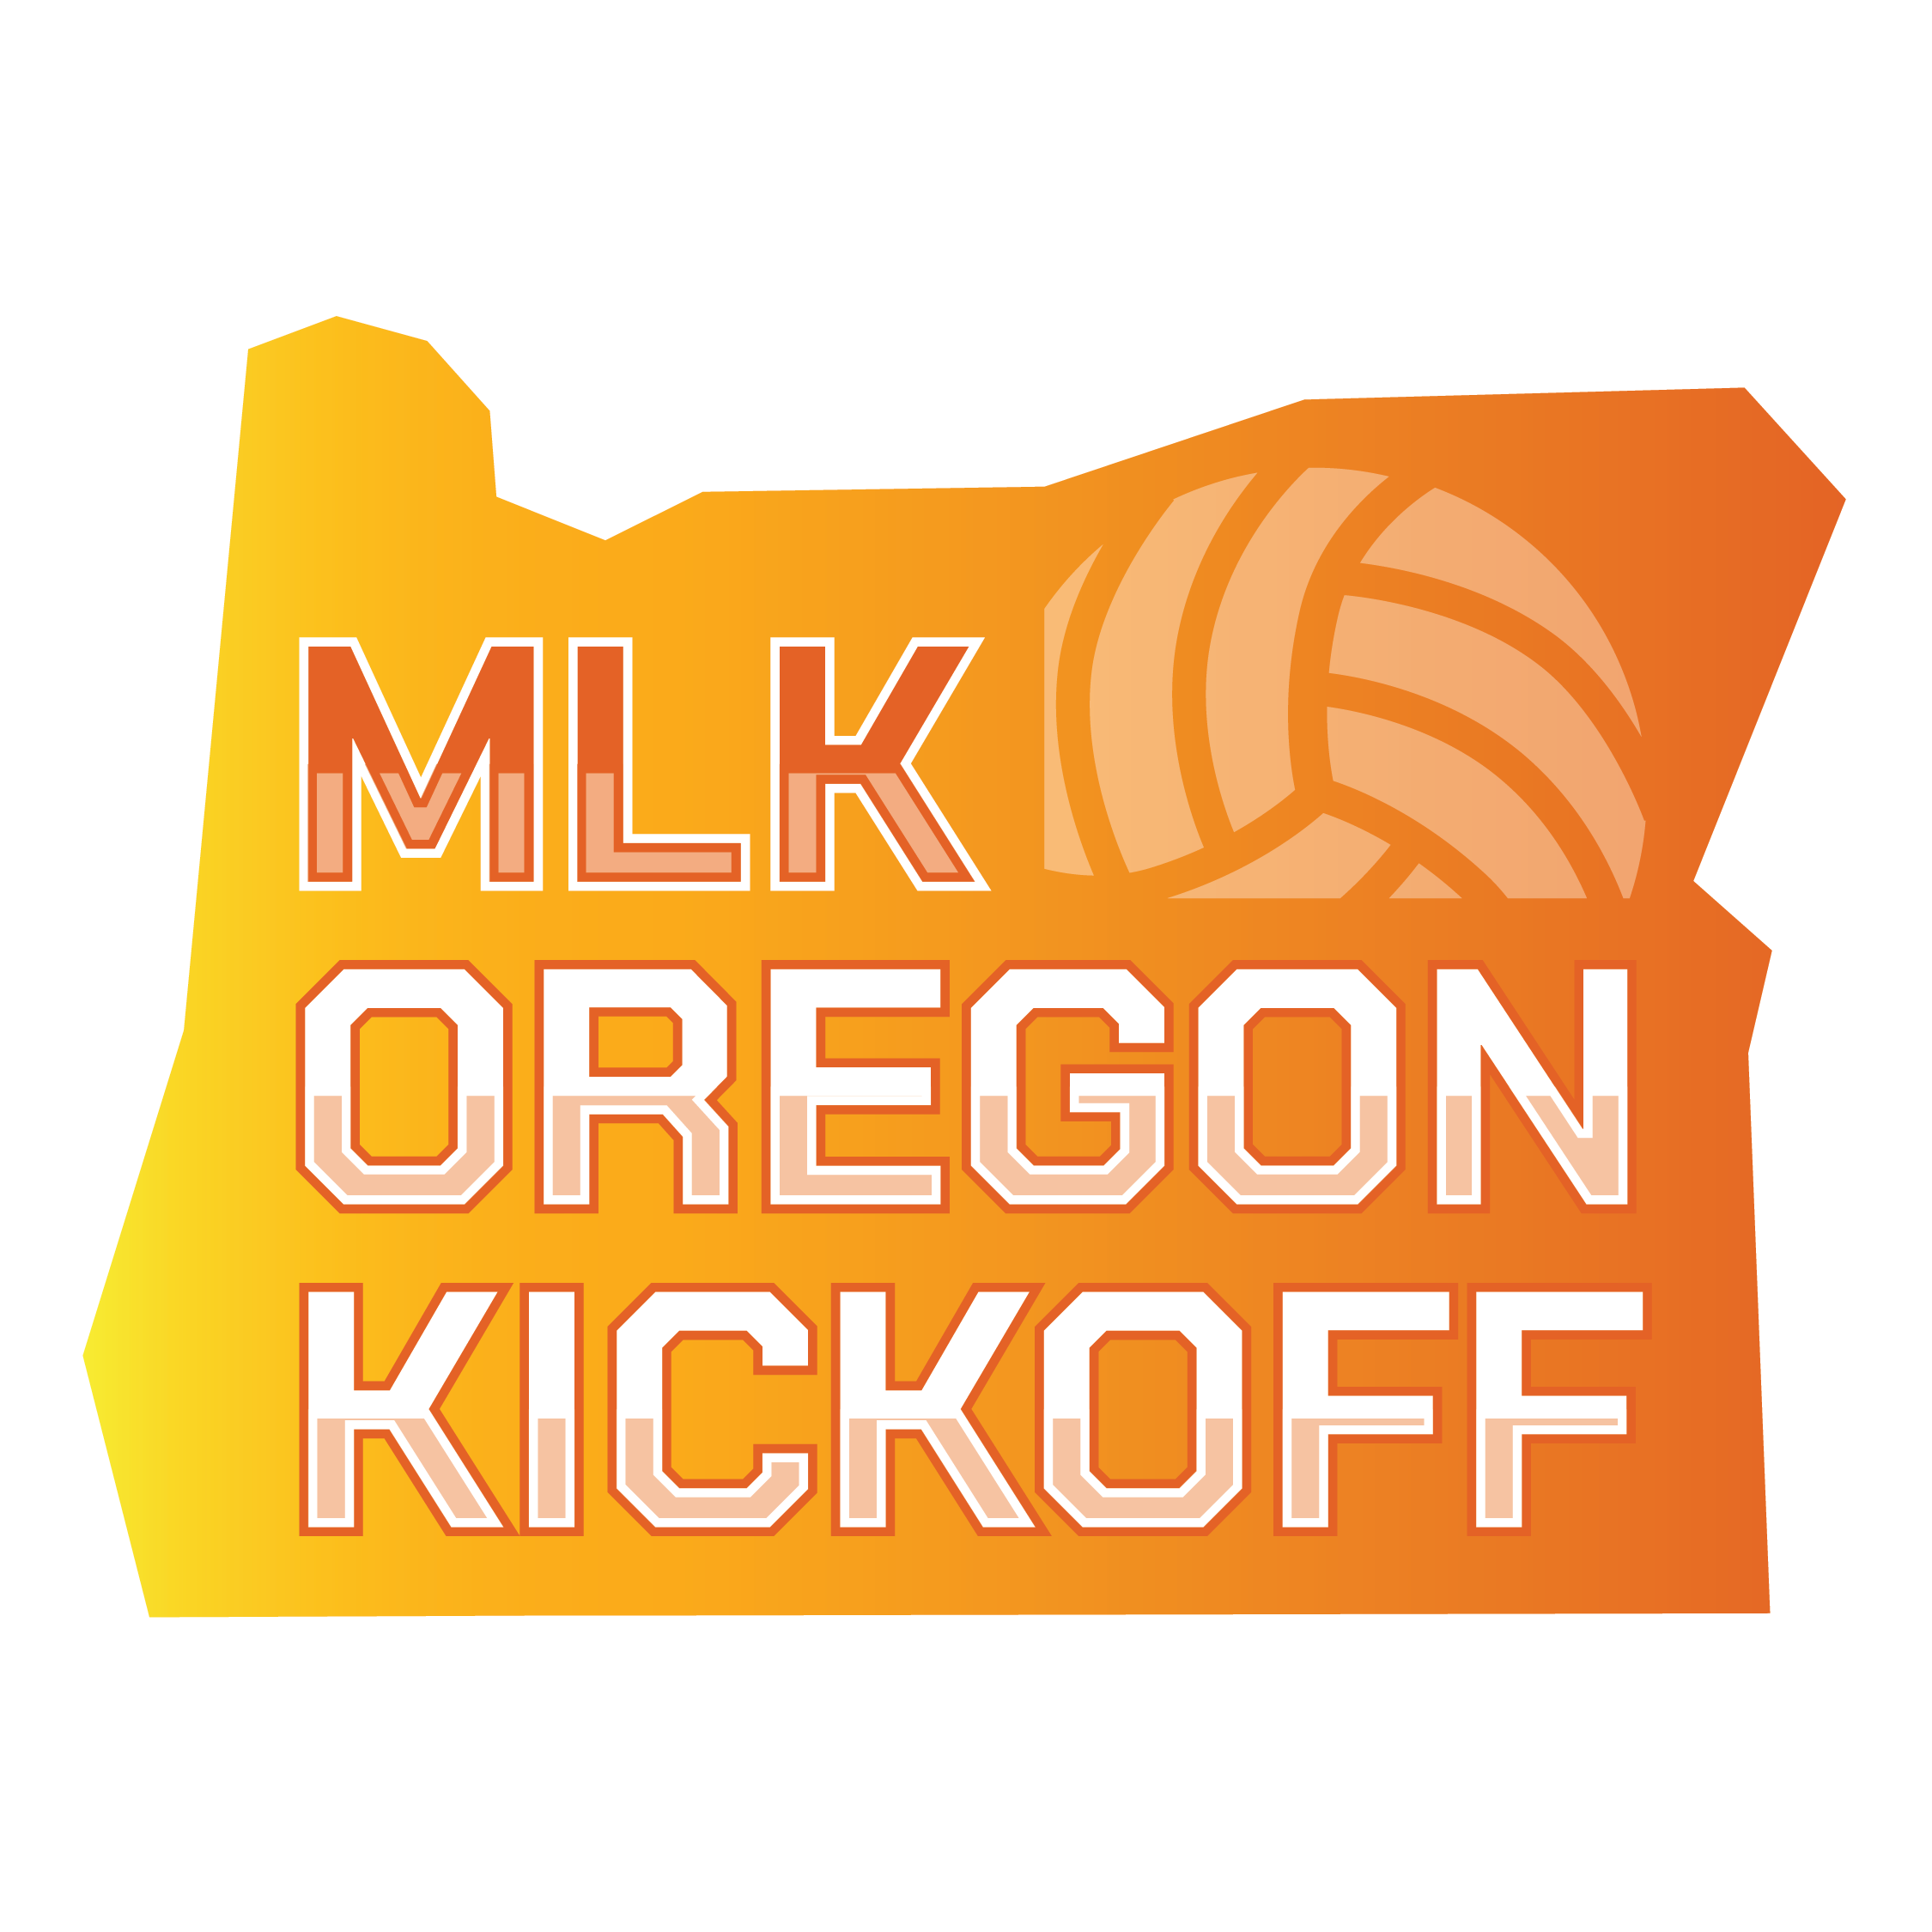 MLK_Oregon_Kickoff (1)